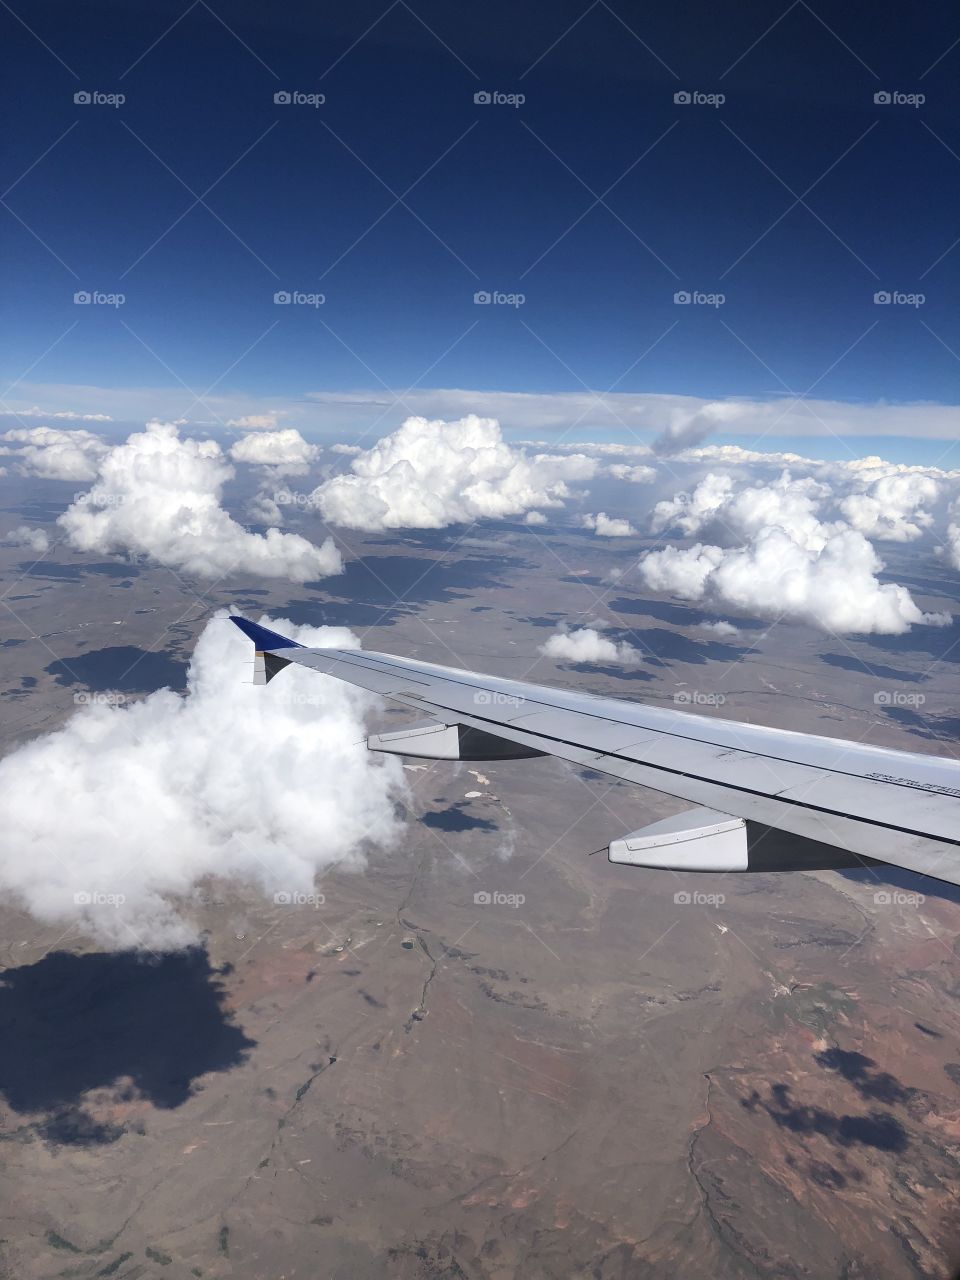 Flying over Colorado 😘